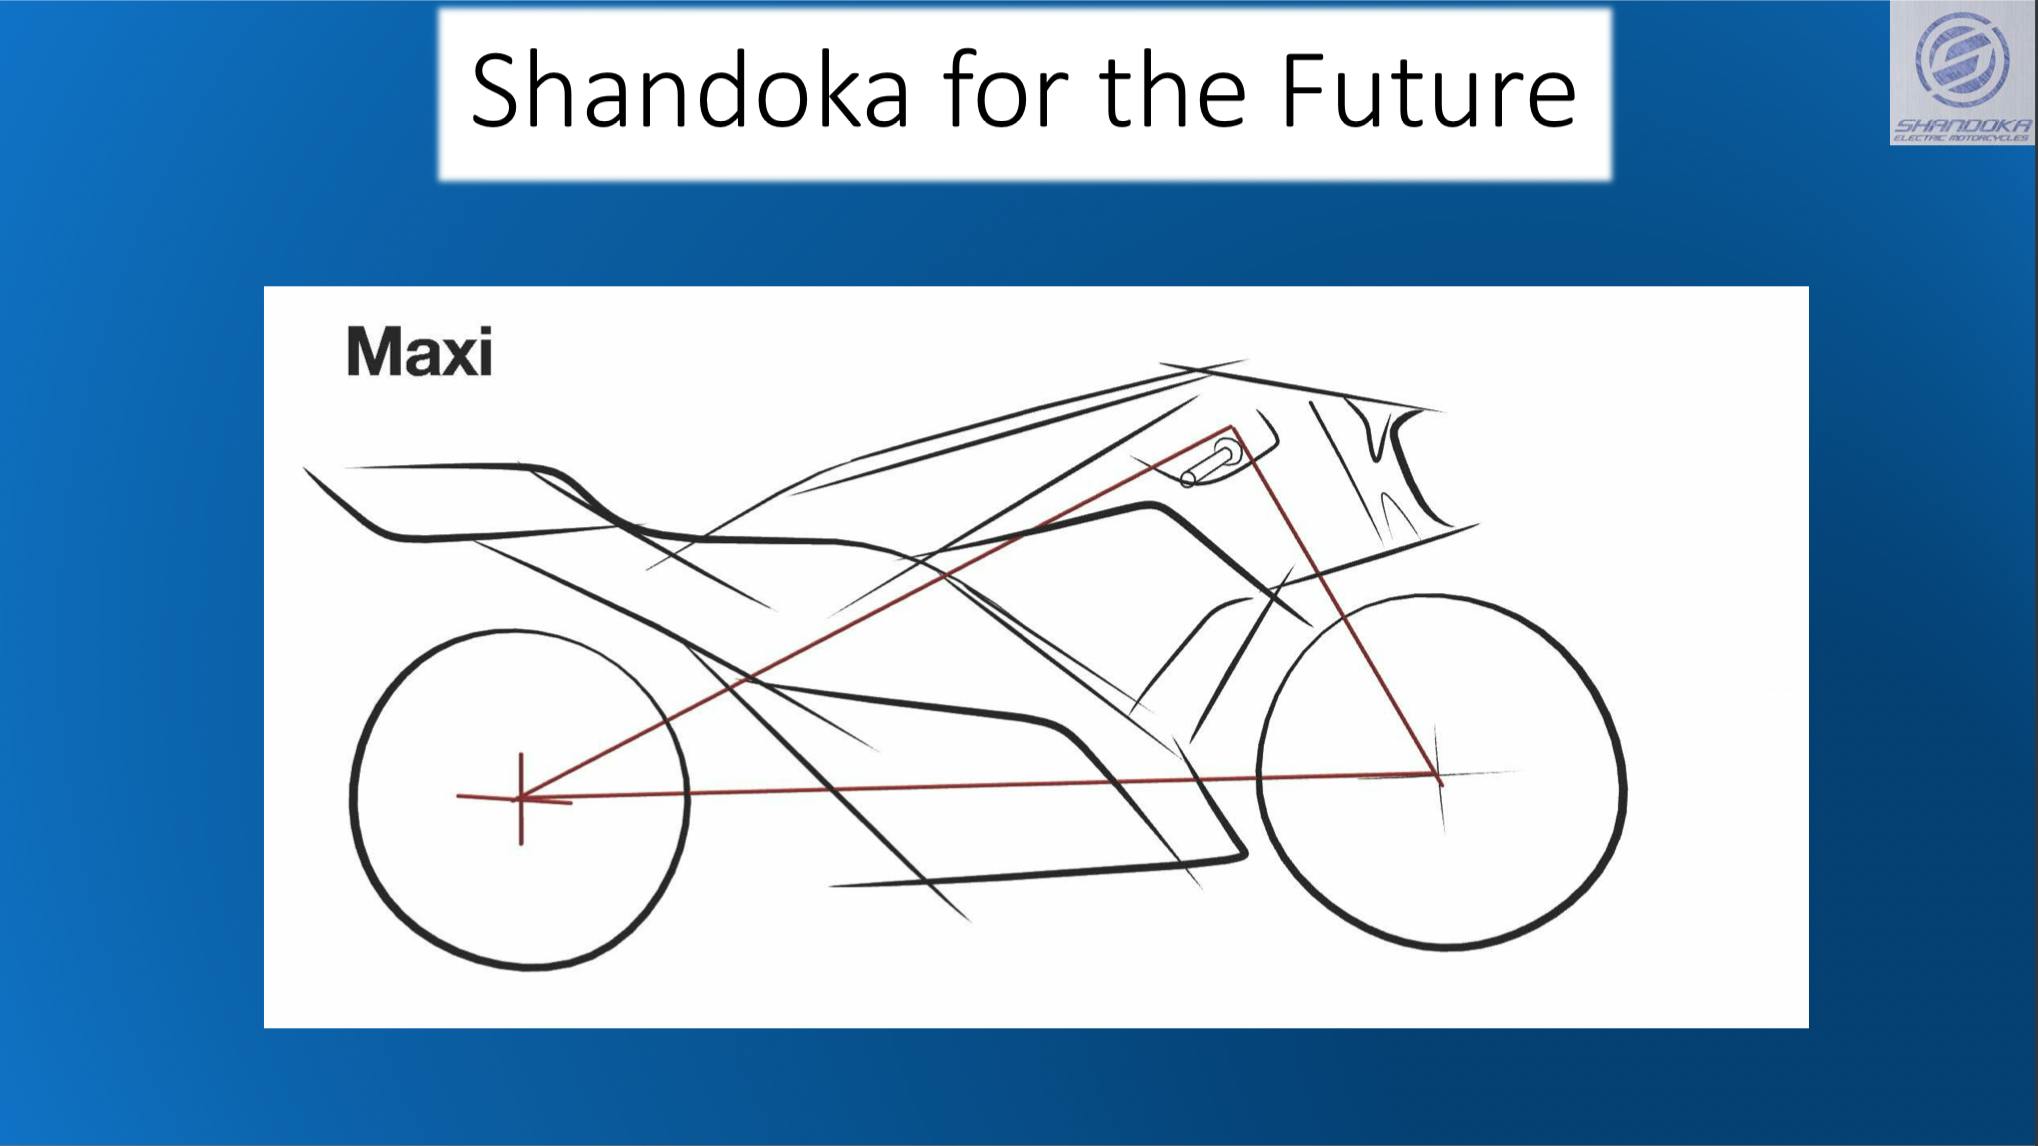 shandoka electric motorcycle industry www.wunderfund.co/shandokacycles